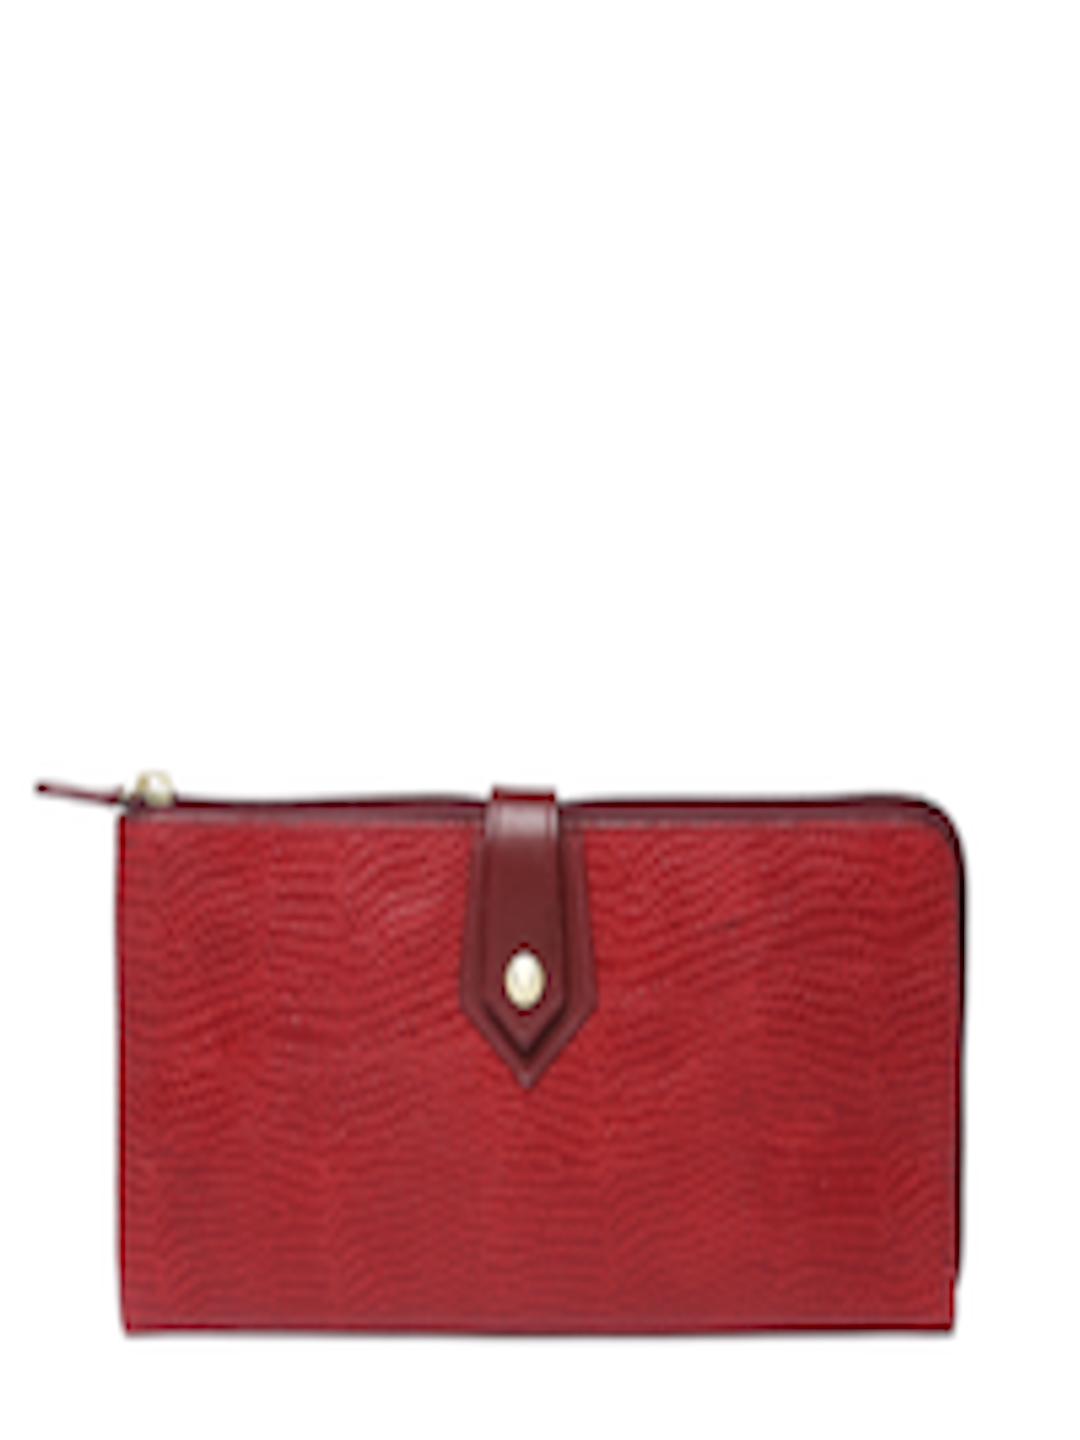 Buy Hidesign Women Red Textured Leather Zip Around Wallet - Wallets for Women 5415453 | Myntra